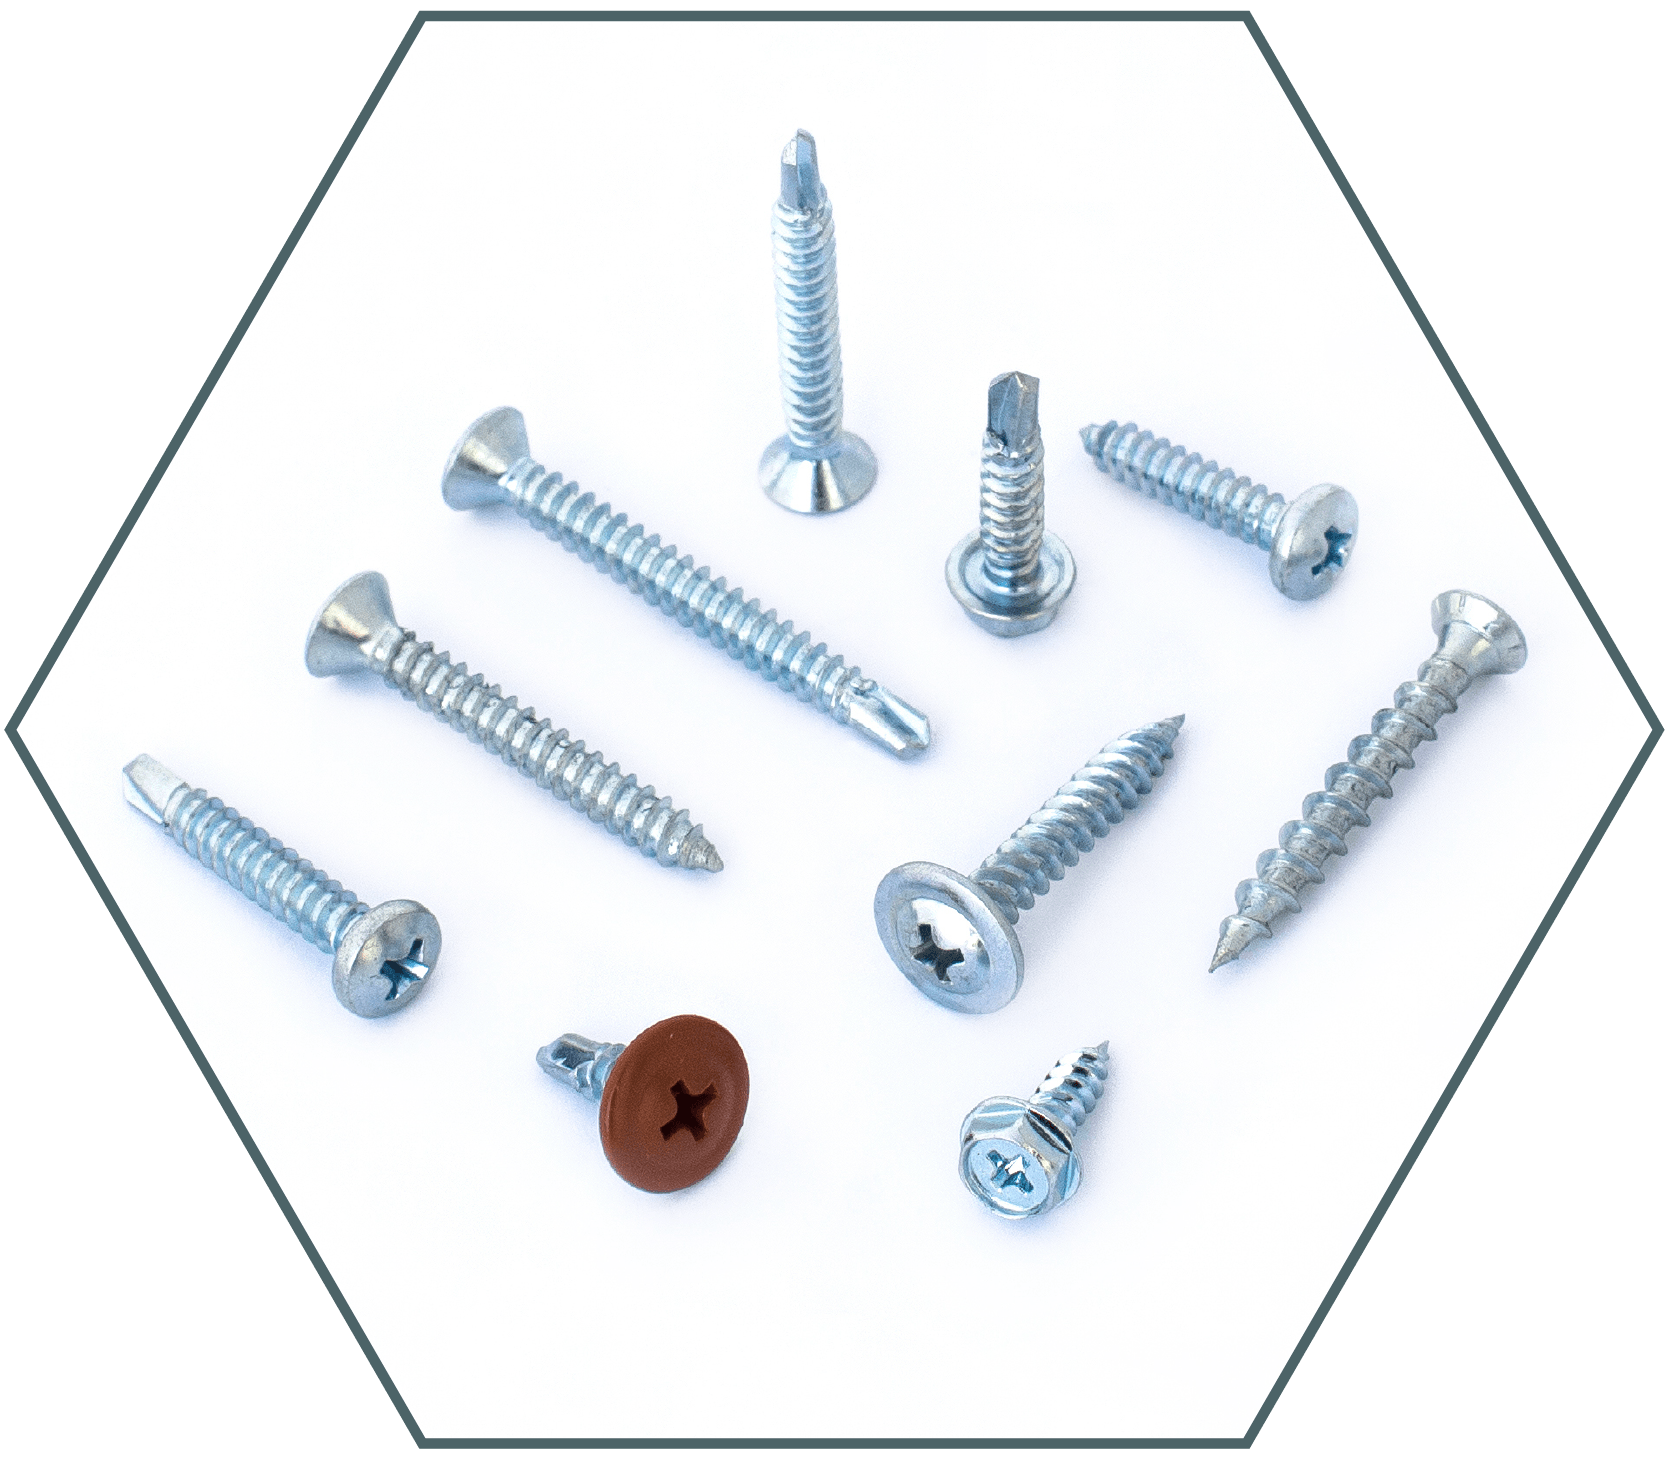 Fasteners specialists - Metal screws